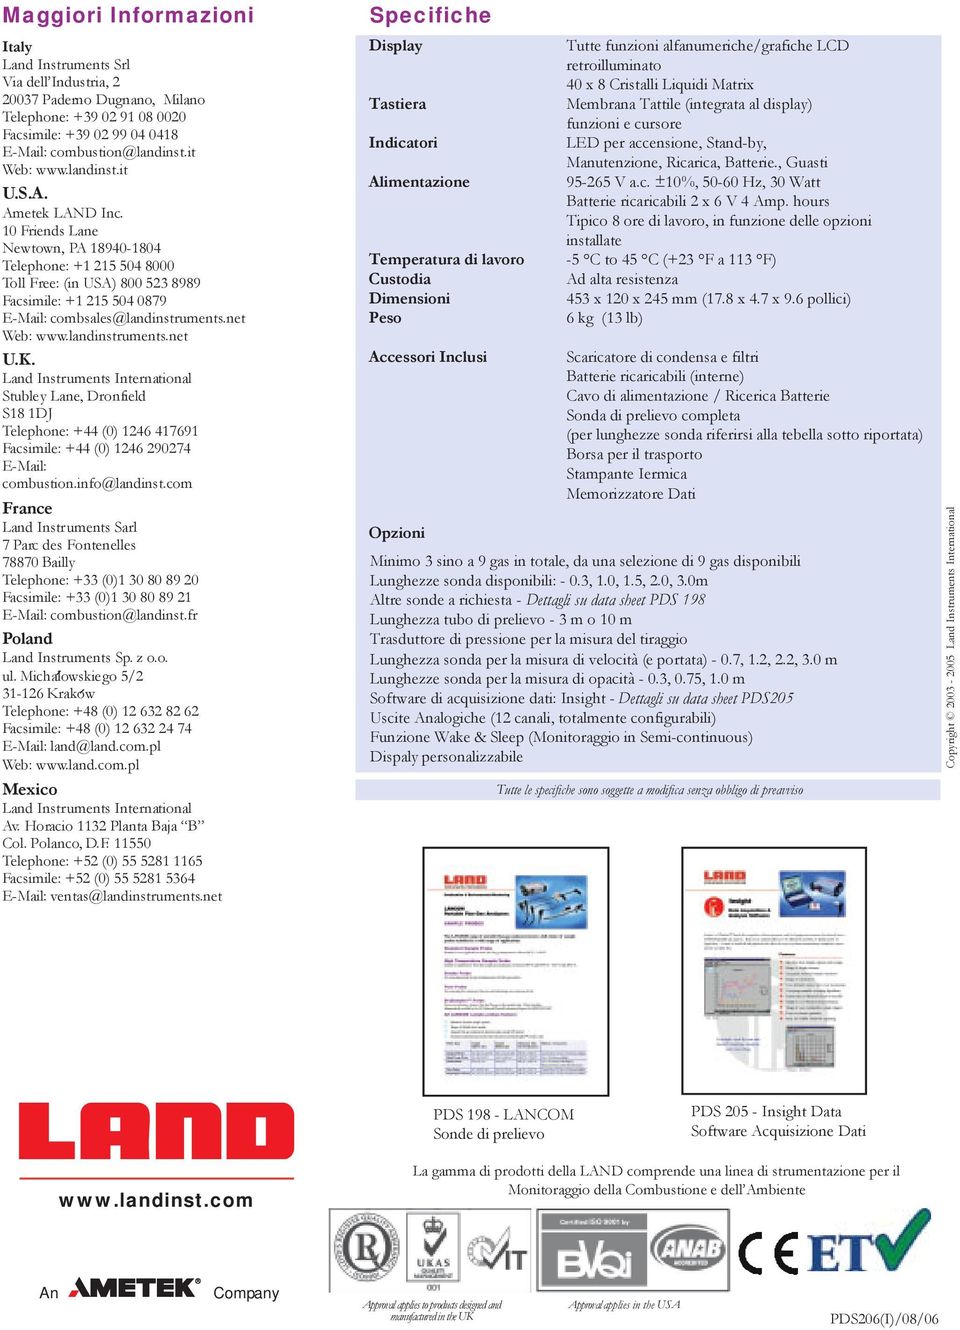 net Web: www.landinstruments.net U.K. Land Instruments International Stubley Lane, Dronfield S18 1DJ Telephone: +44 (0) 1246 417691 Facsimile: +44 (0) 1246 290274 E-Mail: combustion.info@landinst.